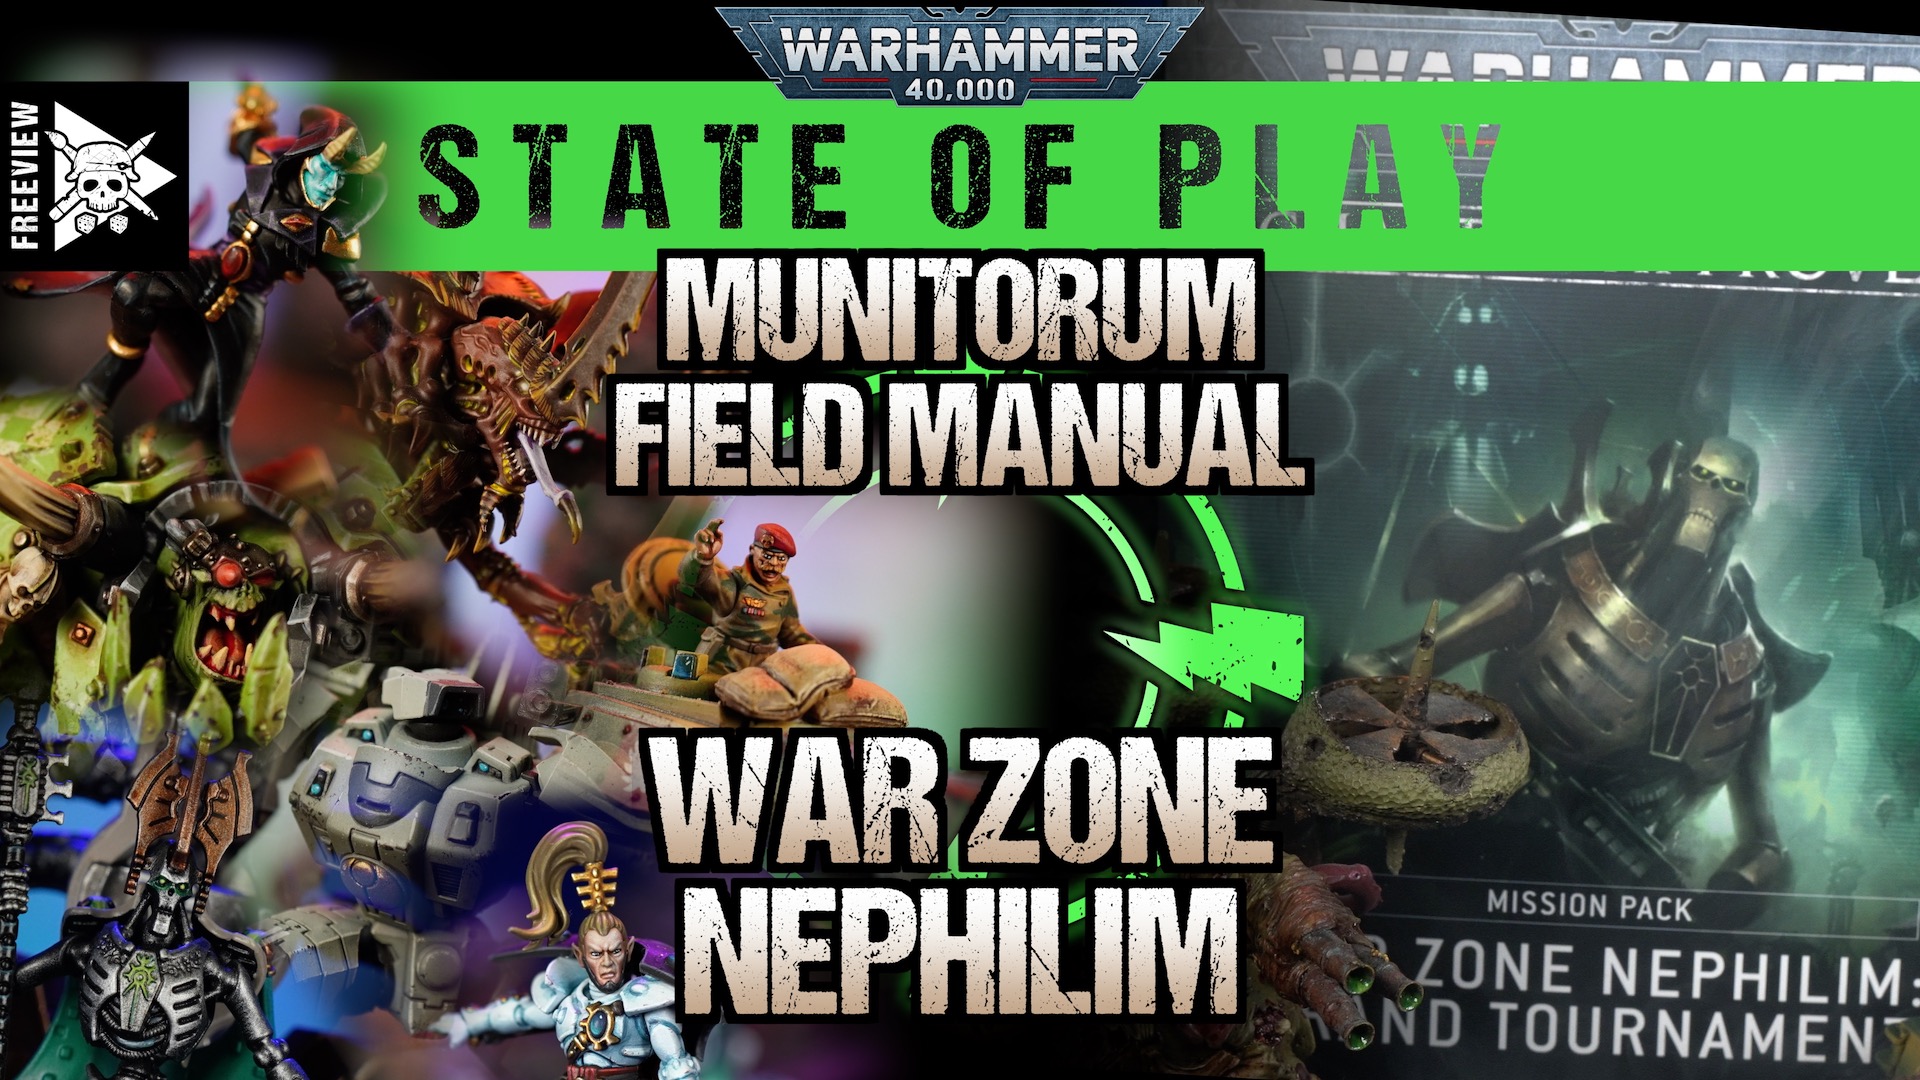 Munitorum Field Manual War Zone Nephilim Warhammer 40,000 State of